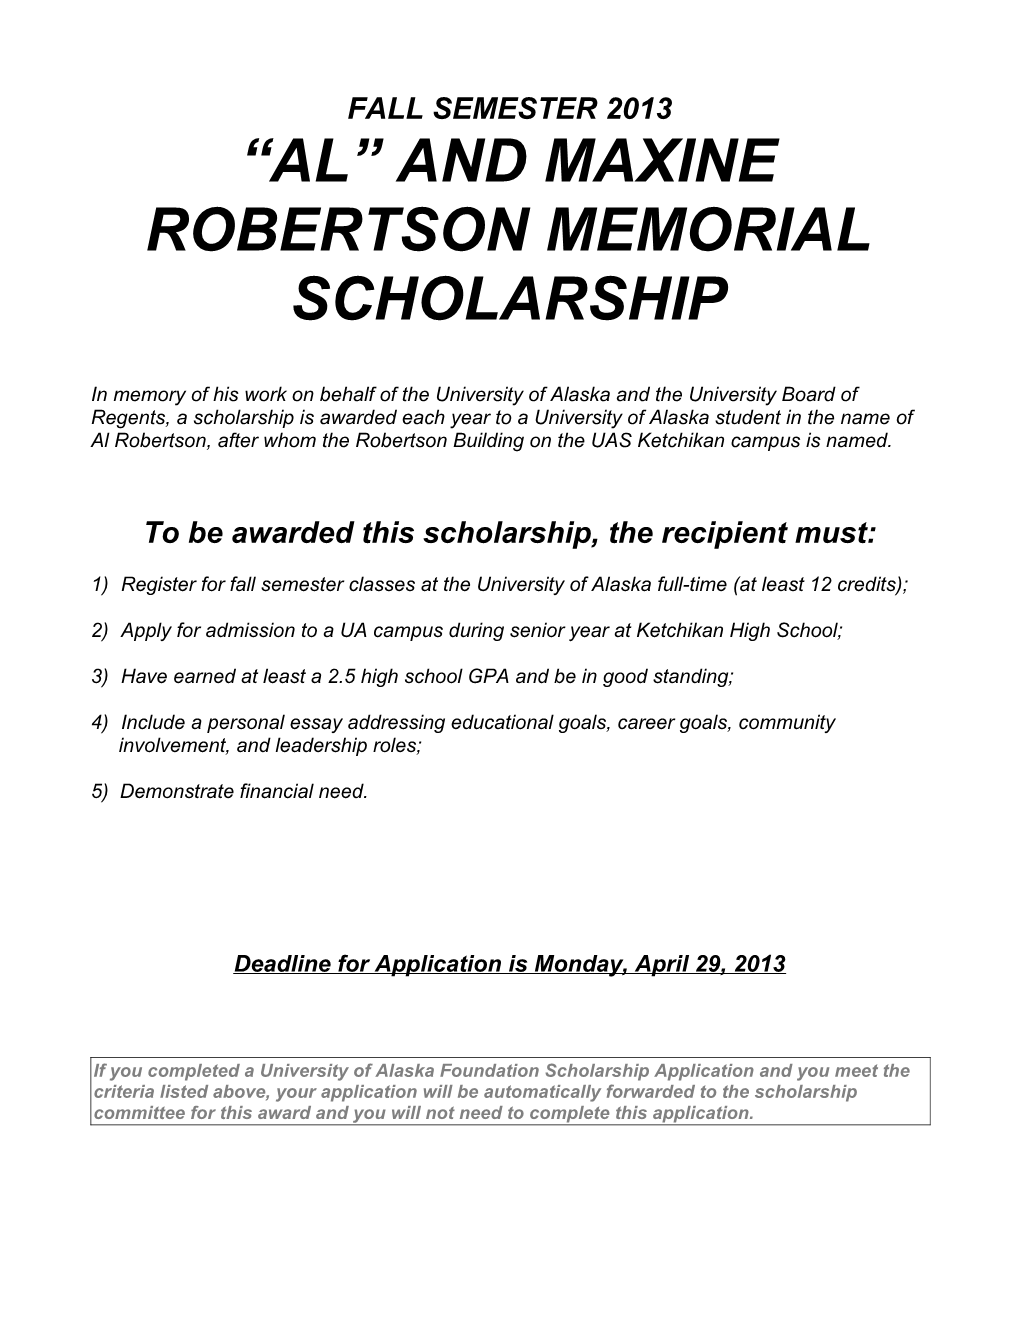 Al and Maxine Robertson Memorial Scholarship